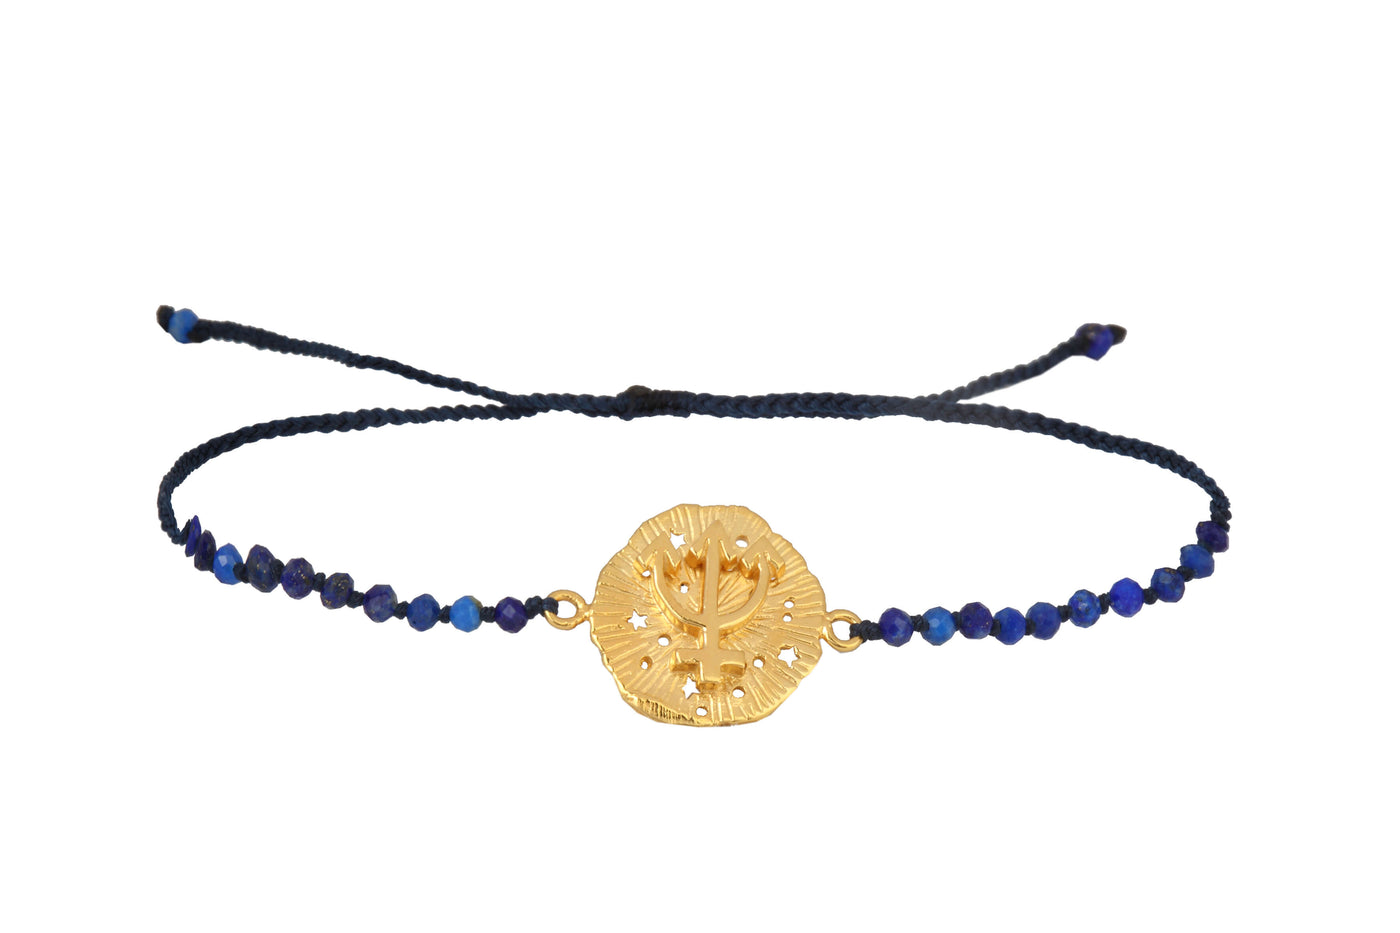 Neptune Medallion Amulet bracelet with beads. Gold plated